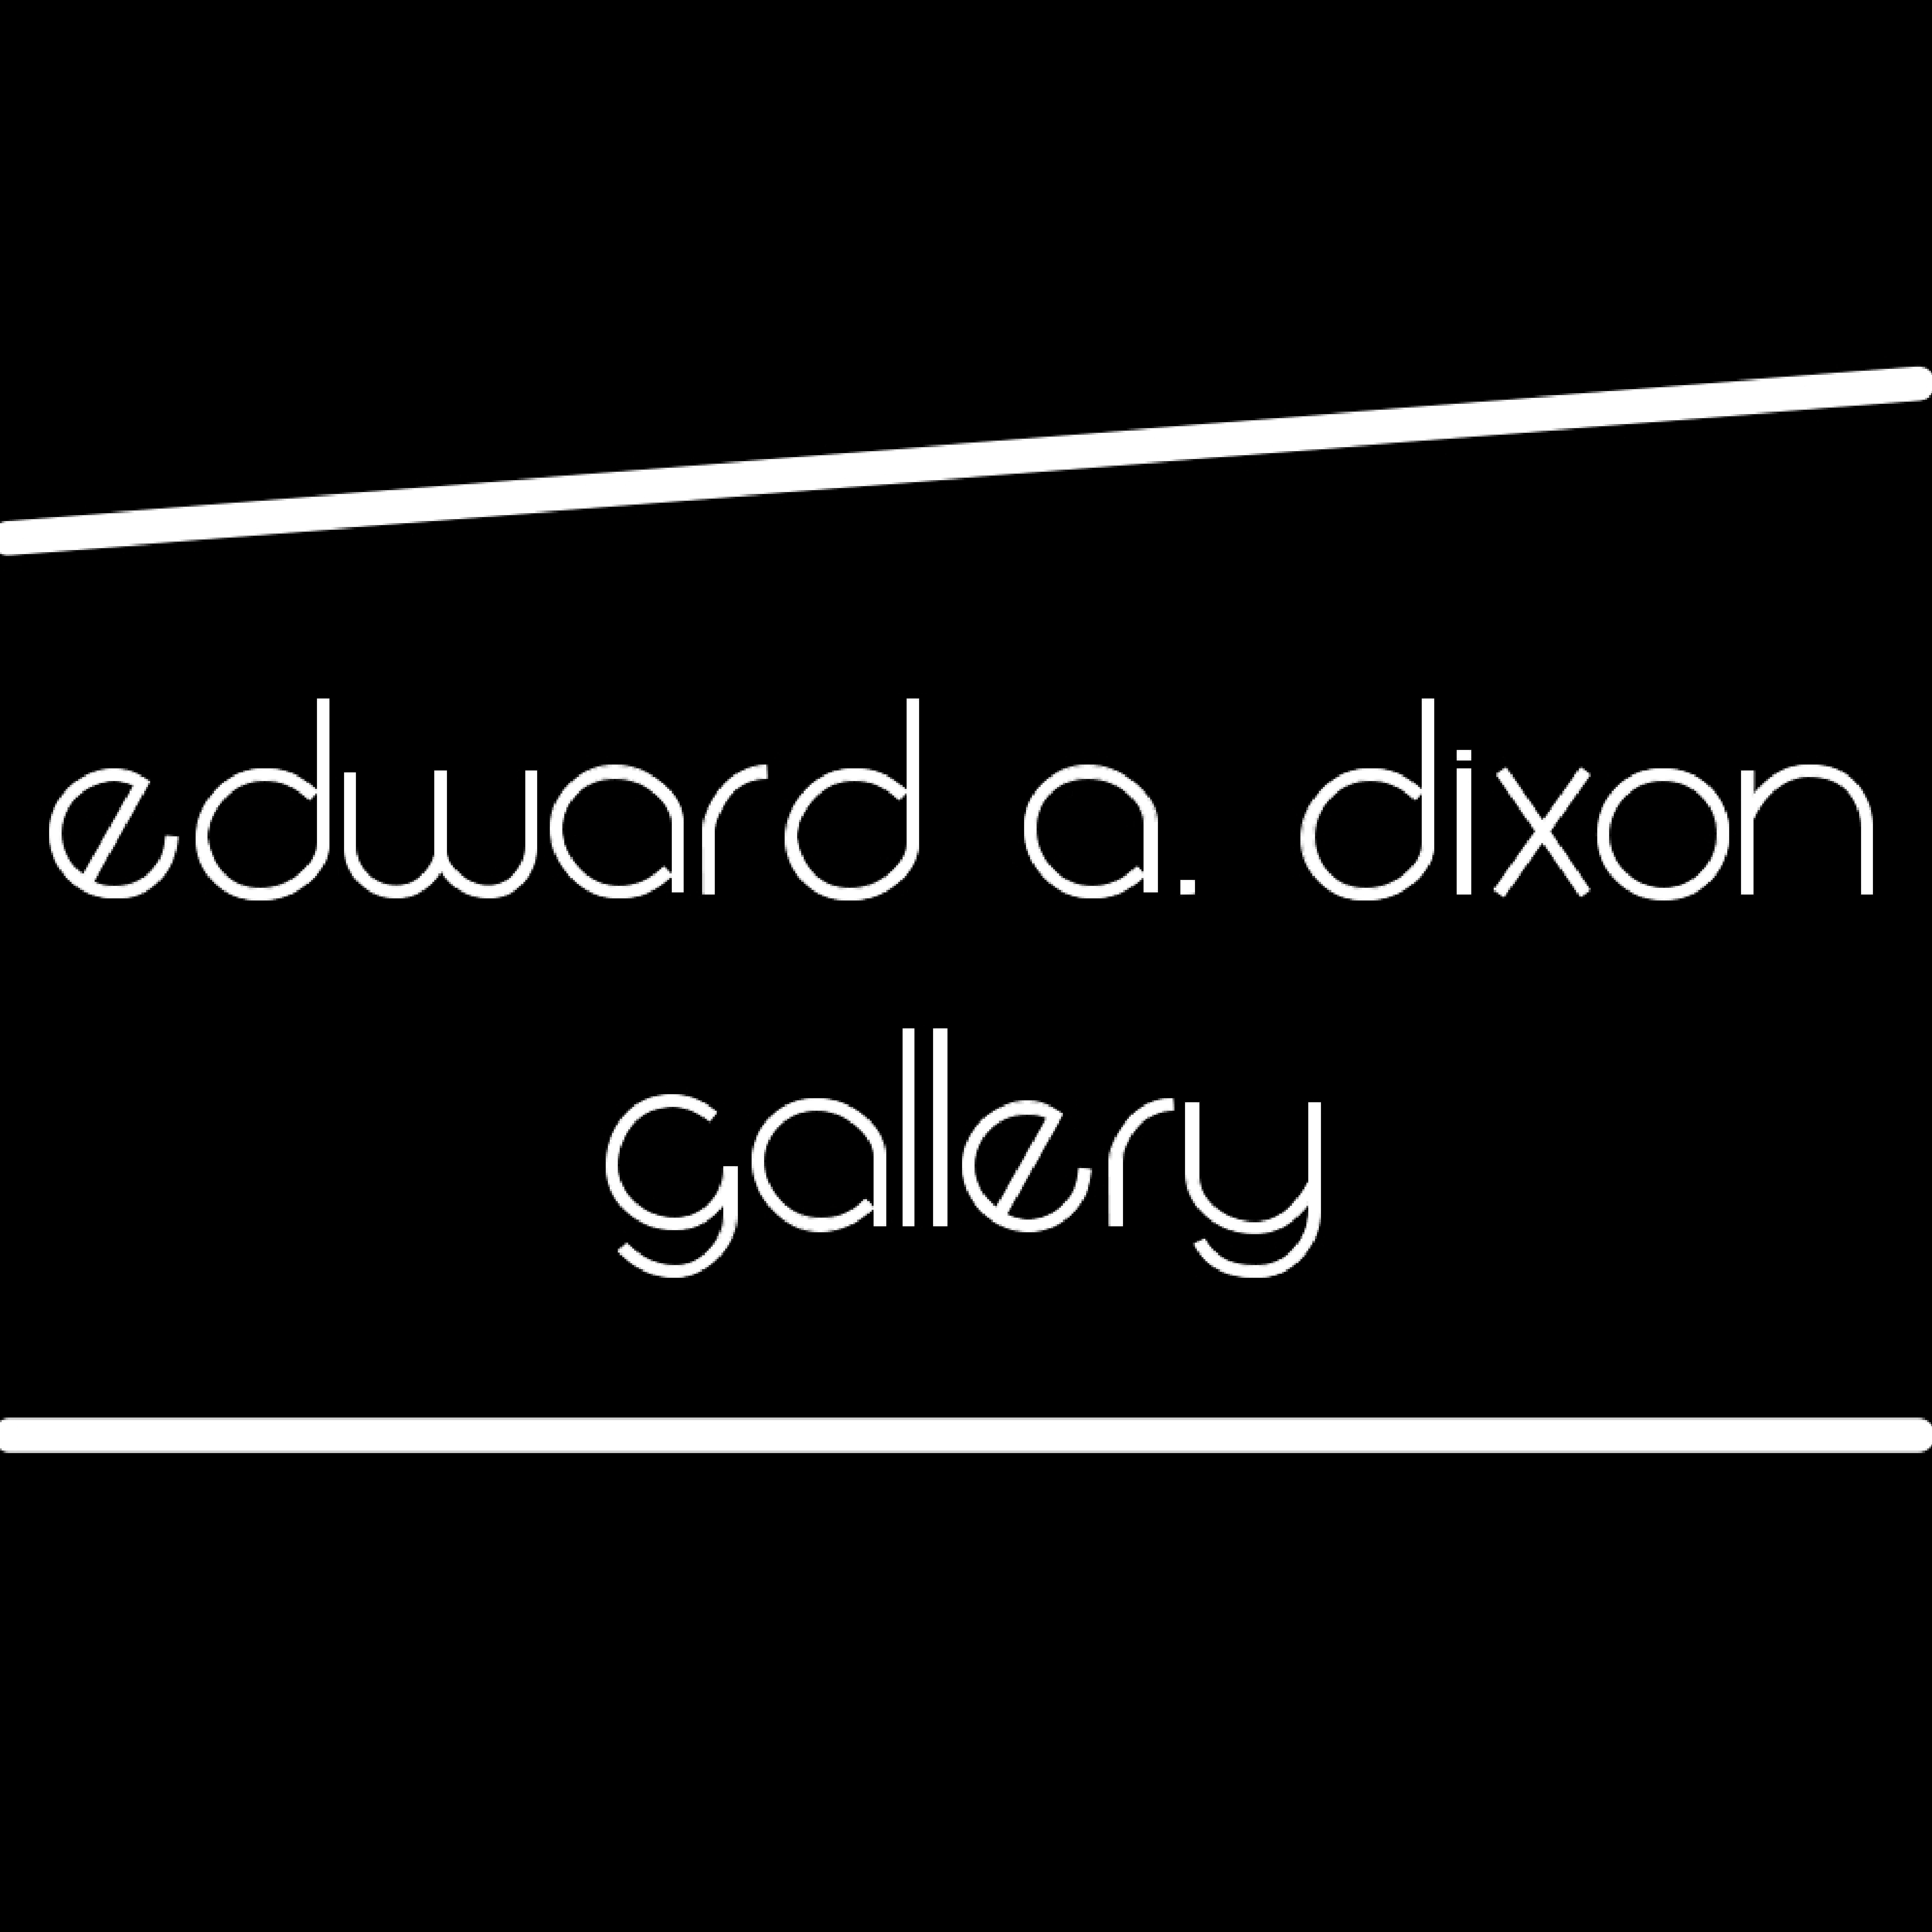 Logo for Edward A. Dixon Gallery